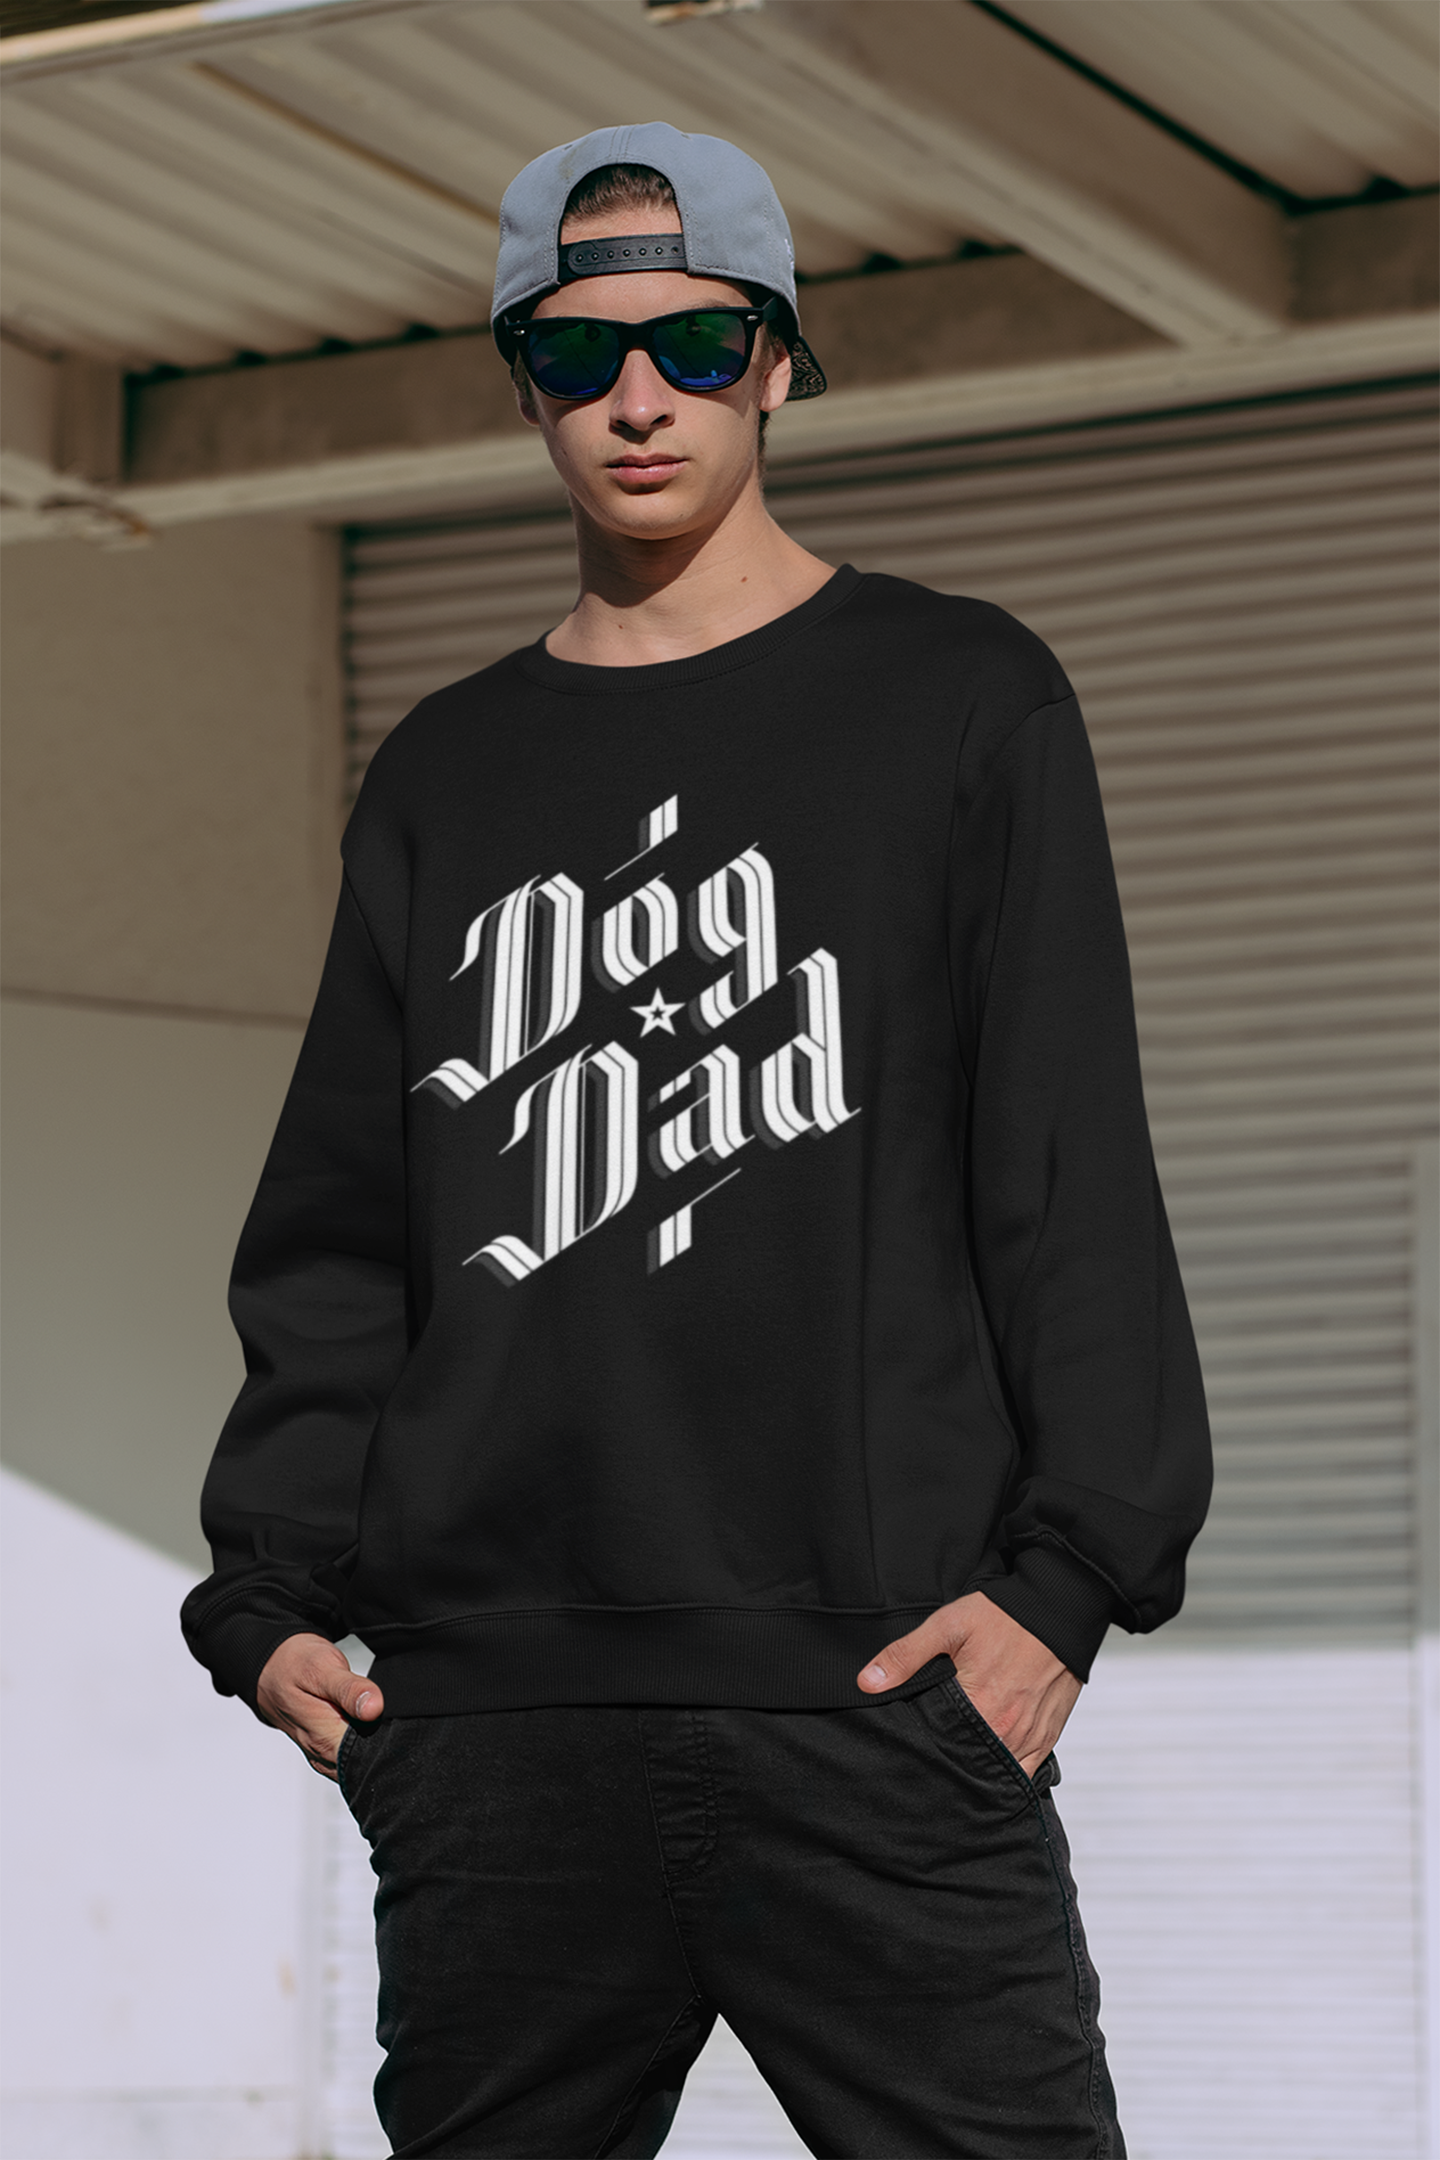 Sophisticated Dog Dad Heavy Blend Crewneck Sweatshirt